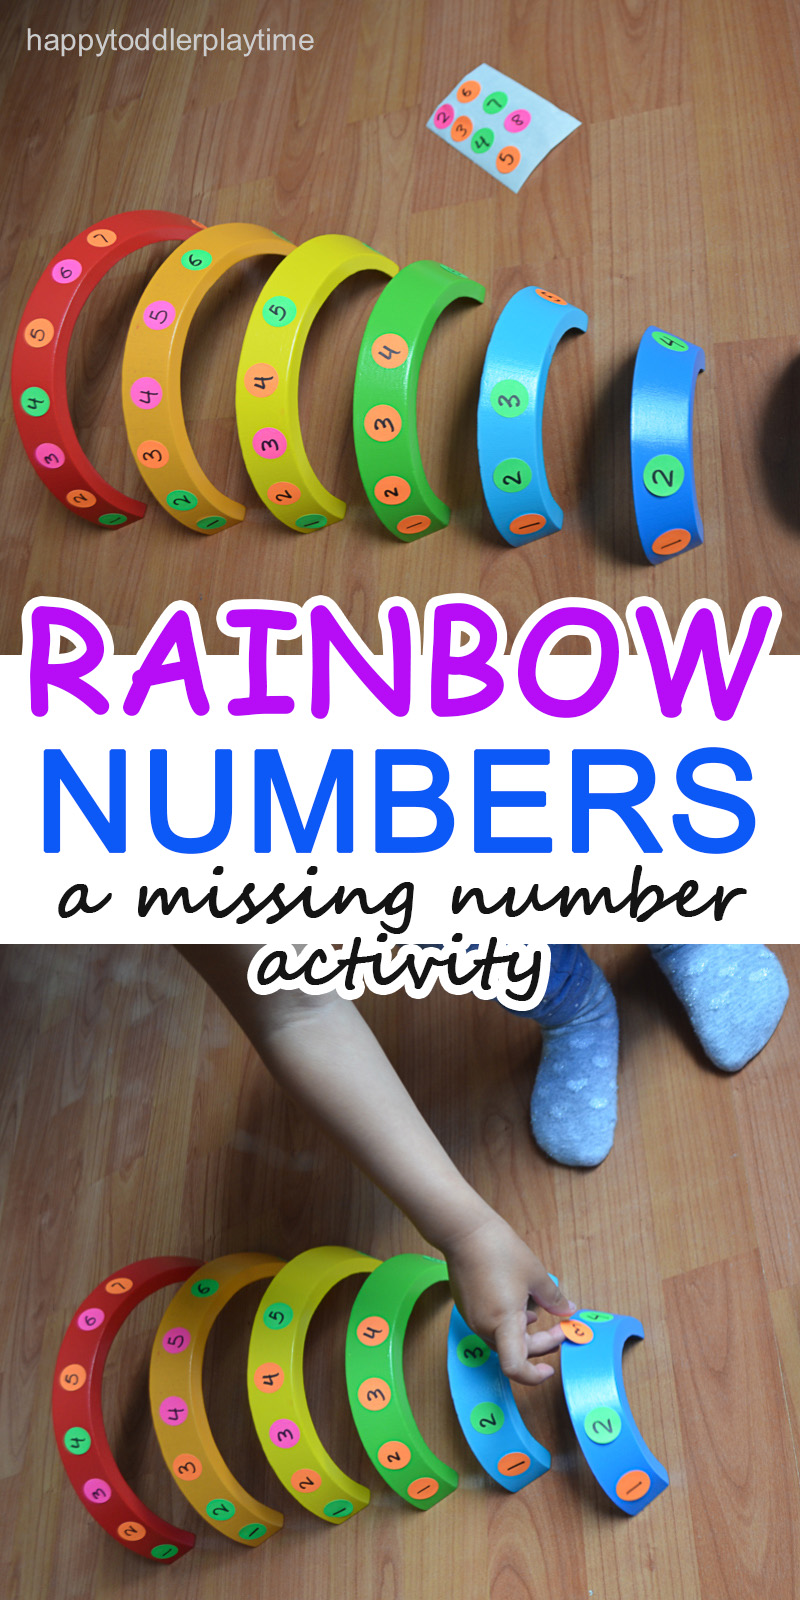 rainbow numbers6PIN.jpg